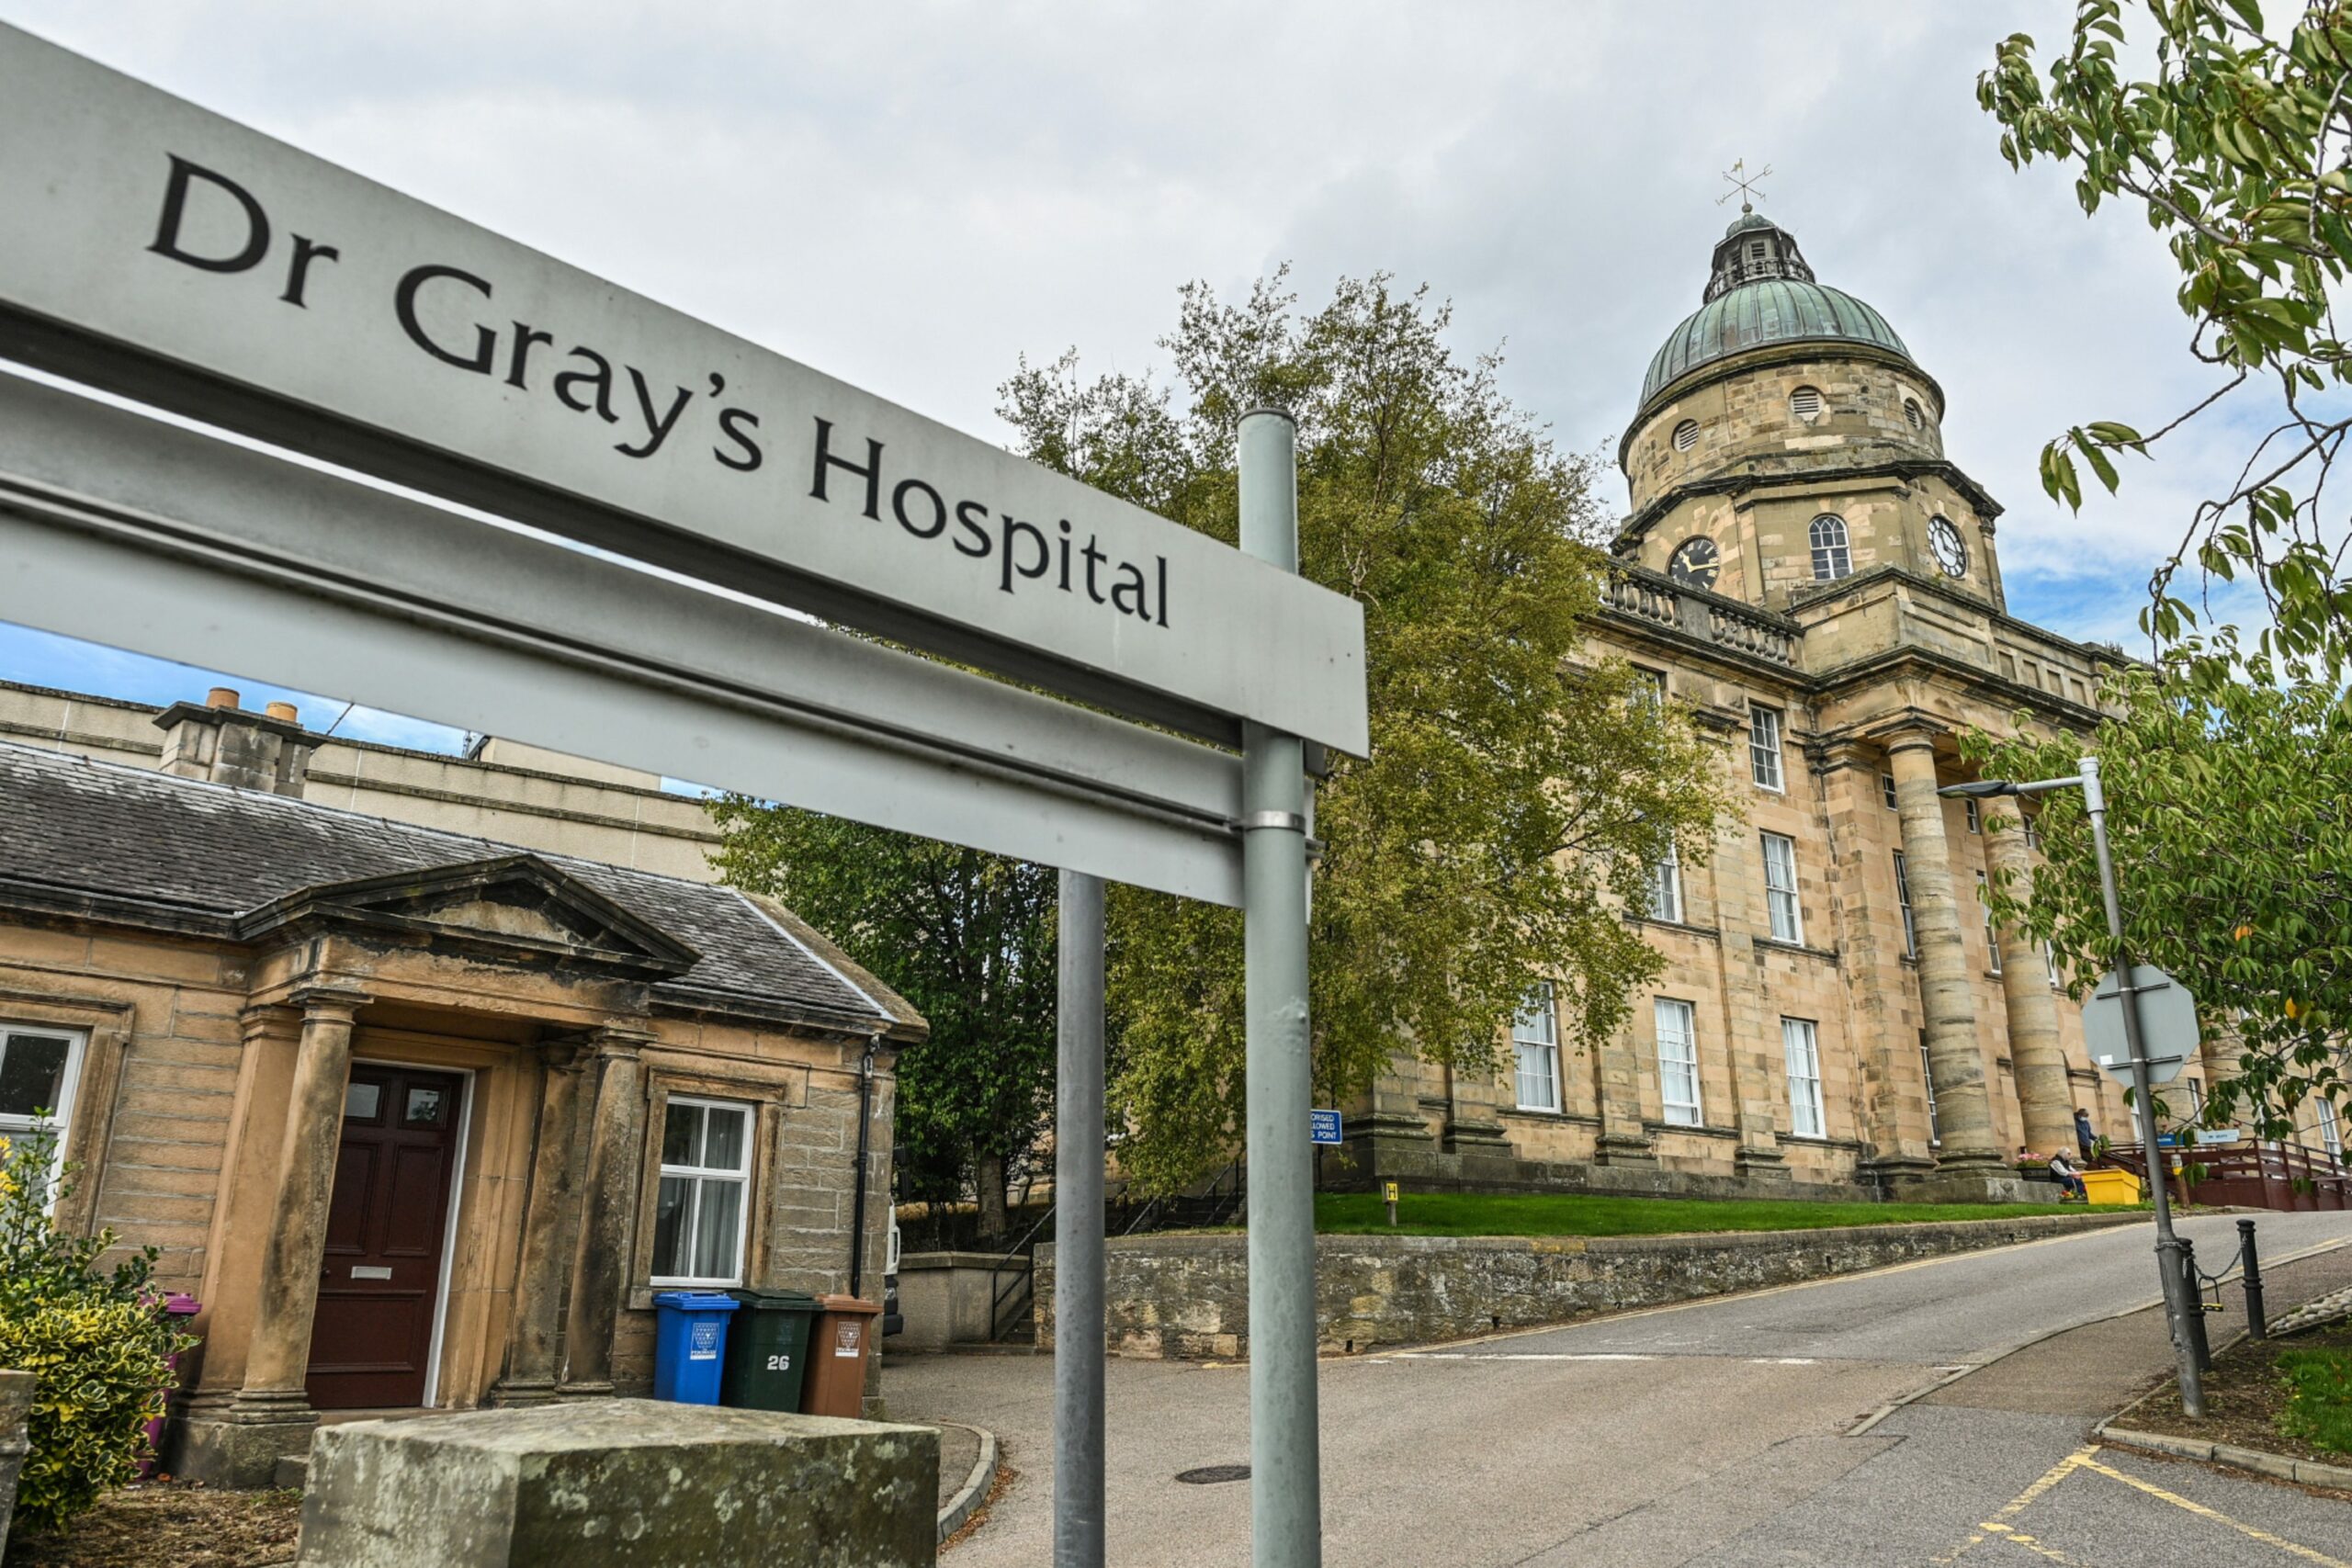 Dr Gray's hospital